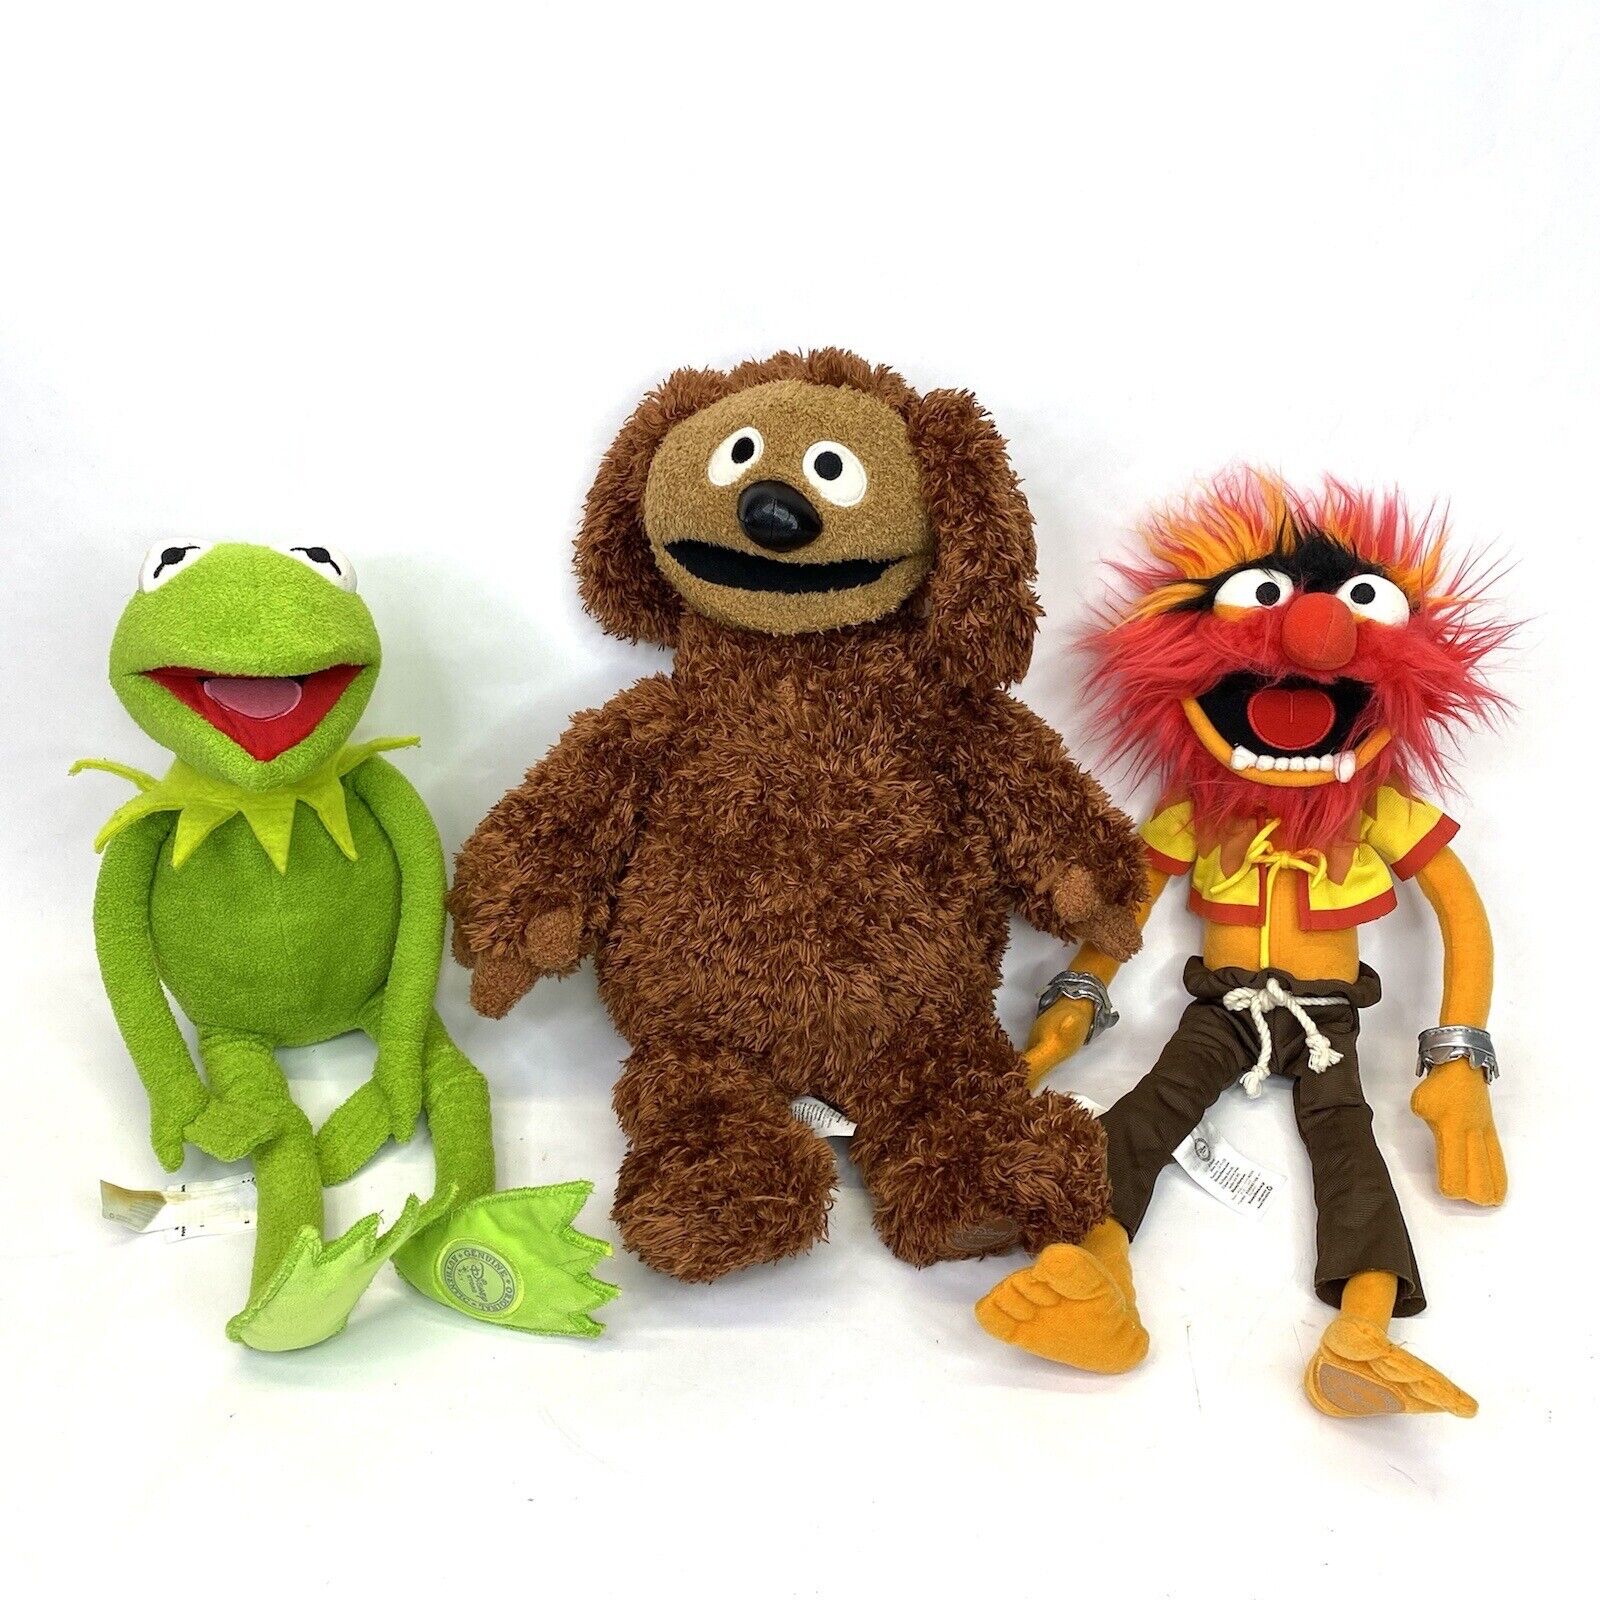 Disney Store Original Muppets Rowlf, Kermit & Animal Stuffed Toy Lot Of 3 Bundle